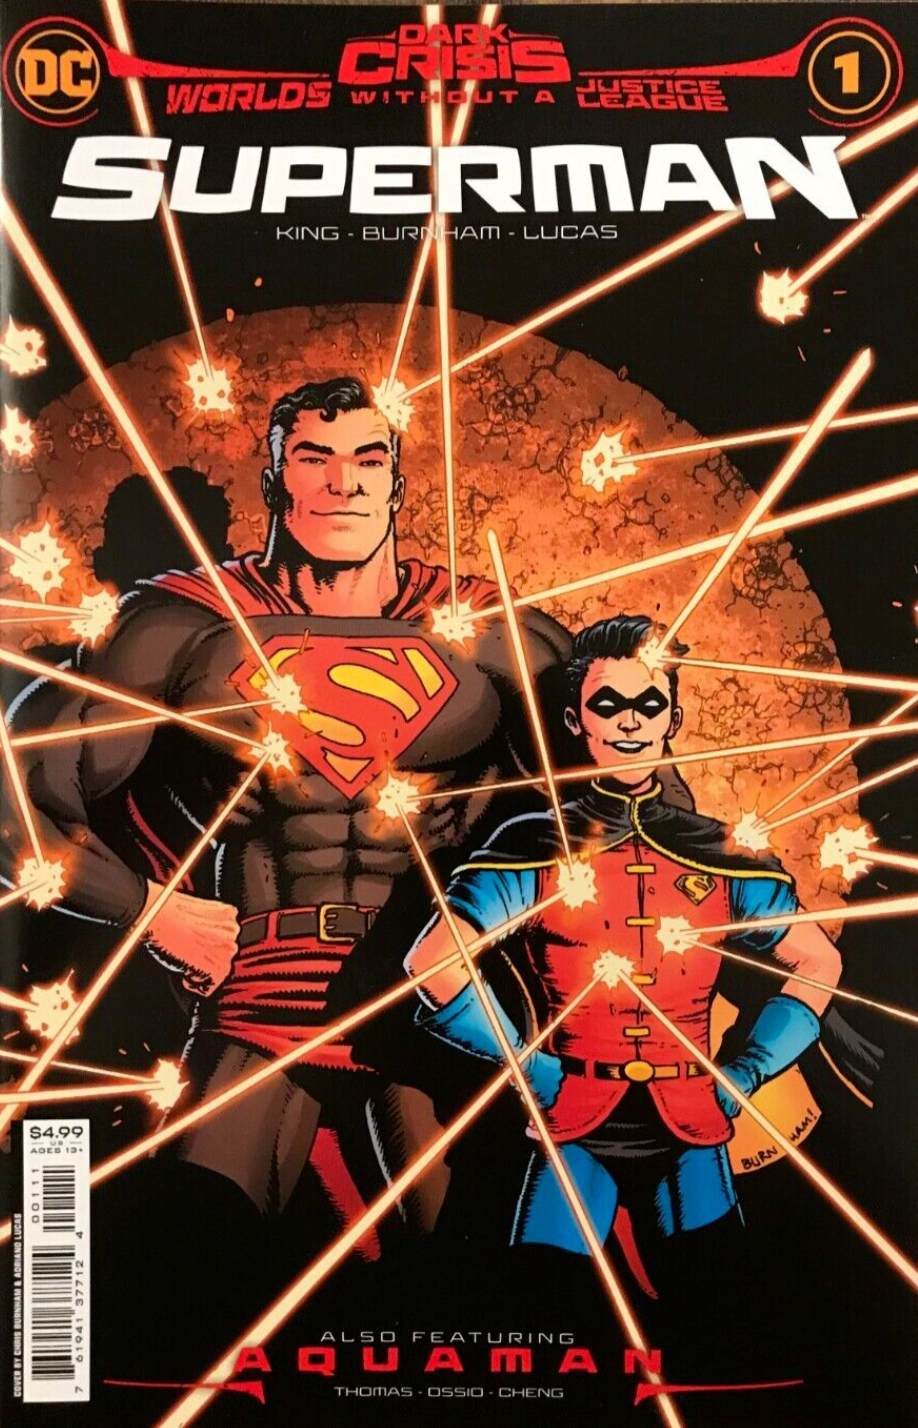 DARK CRISIS WORLDS WITHOUT A JUSTICE LEAGUE SUPERMAN #1 (ONE SHOT) CVR A CHRIS BURNHAM 2022